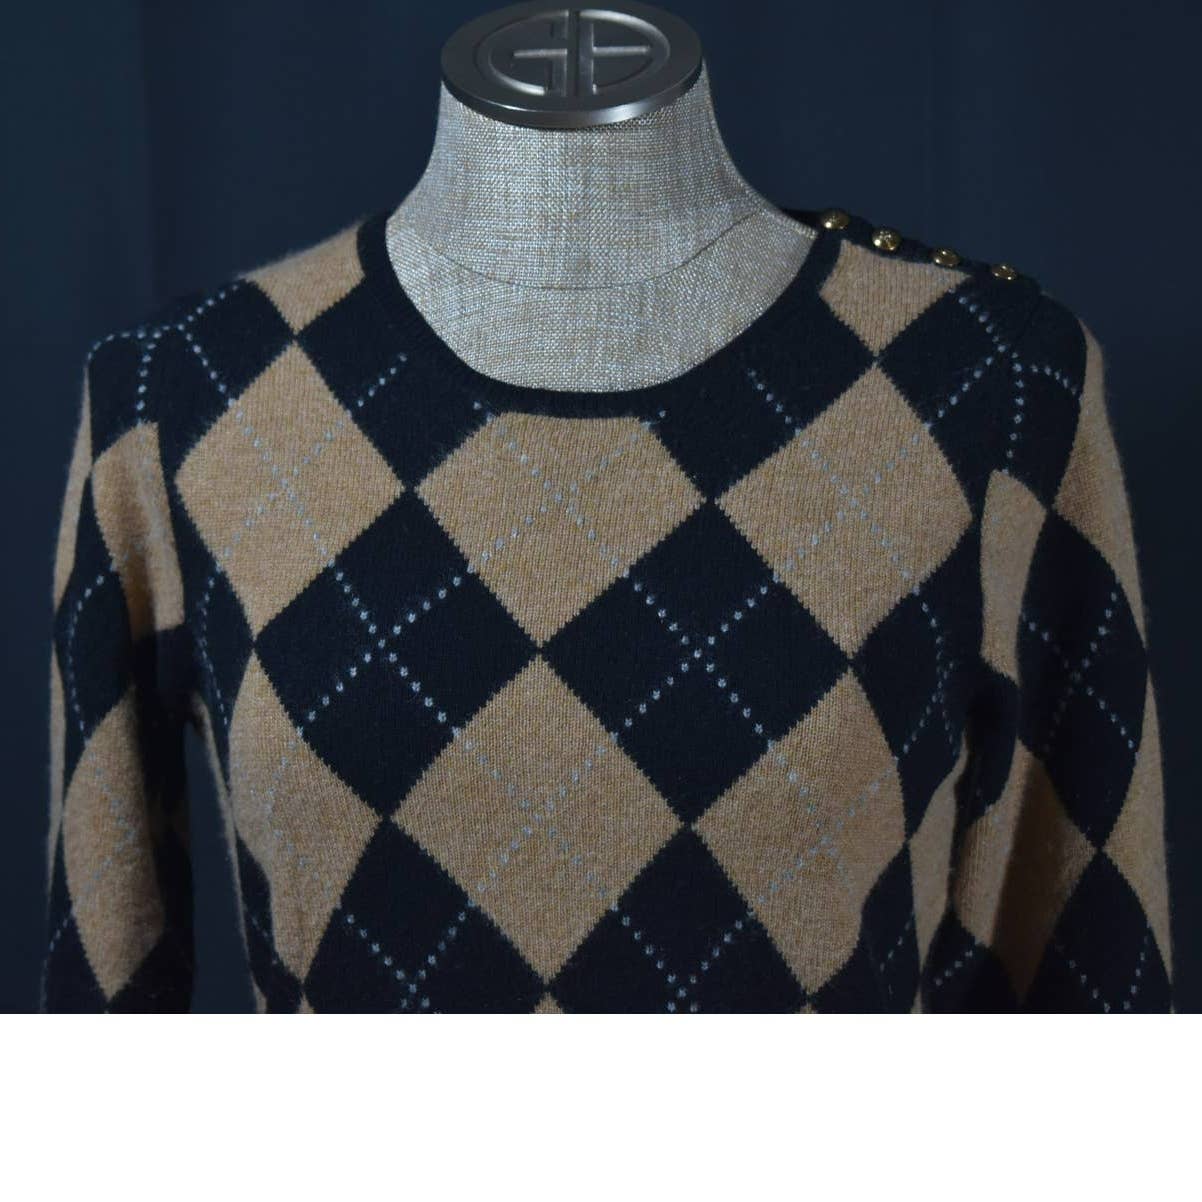 Vintage J.Crew Plaid Black and Tan Cashmere Sweater - S